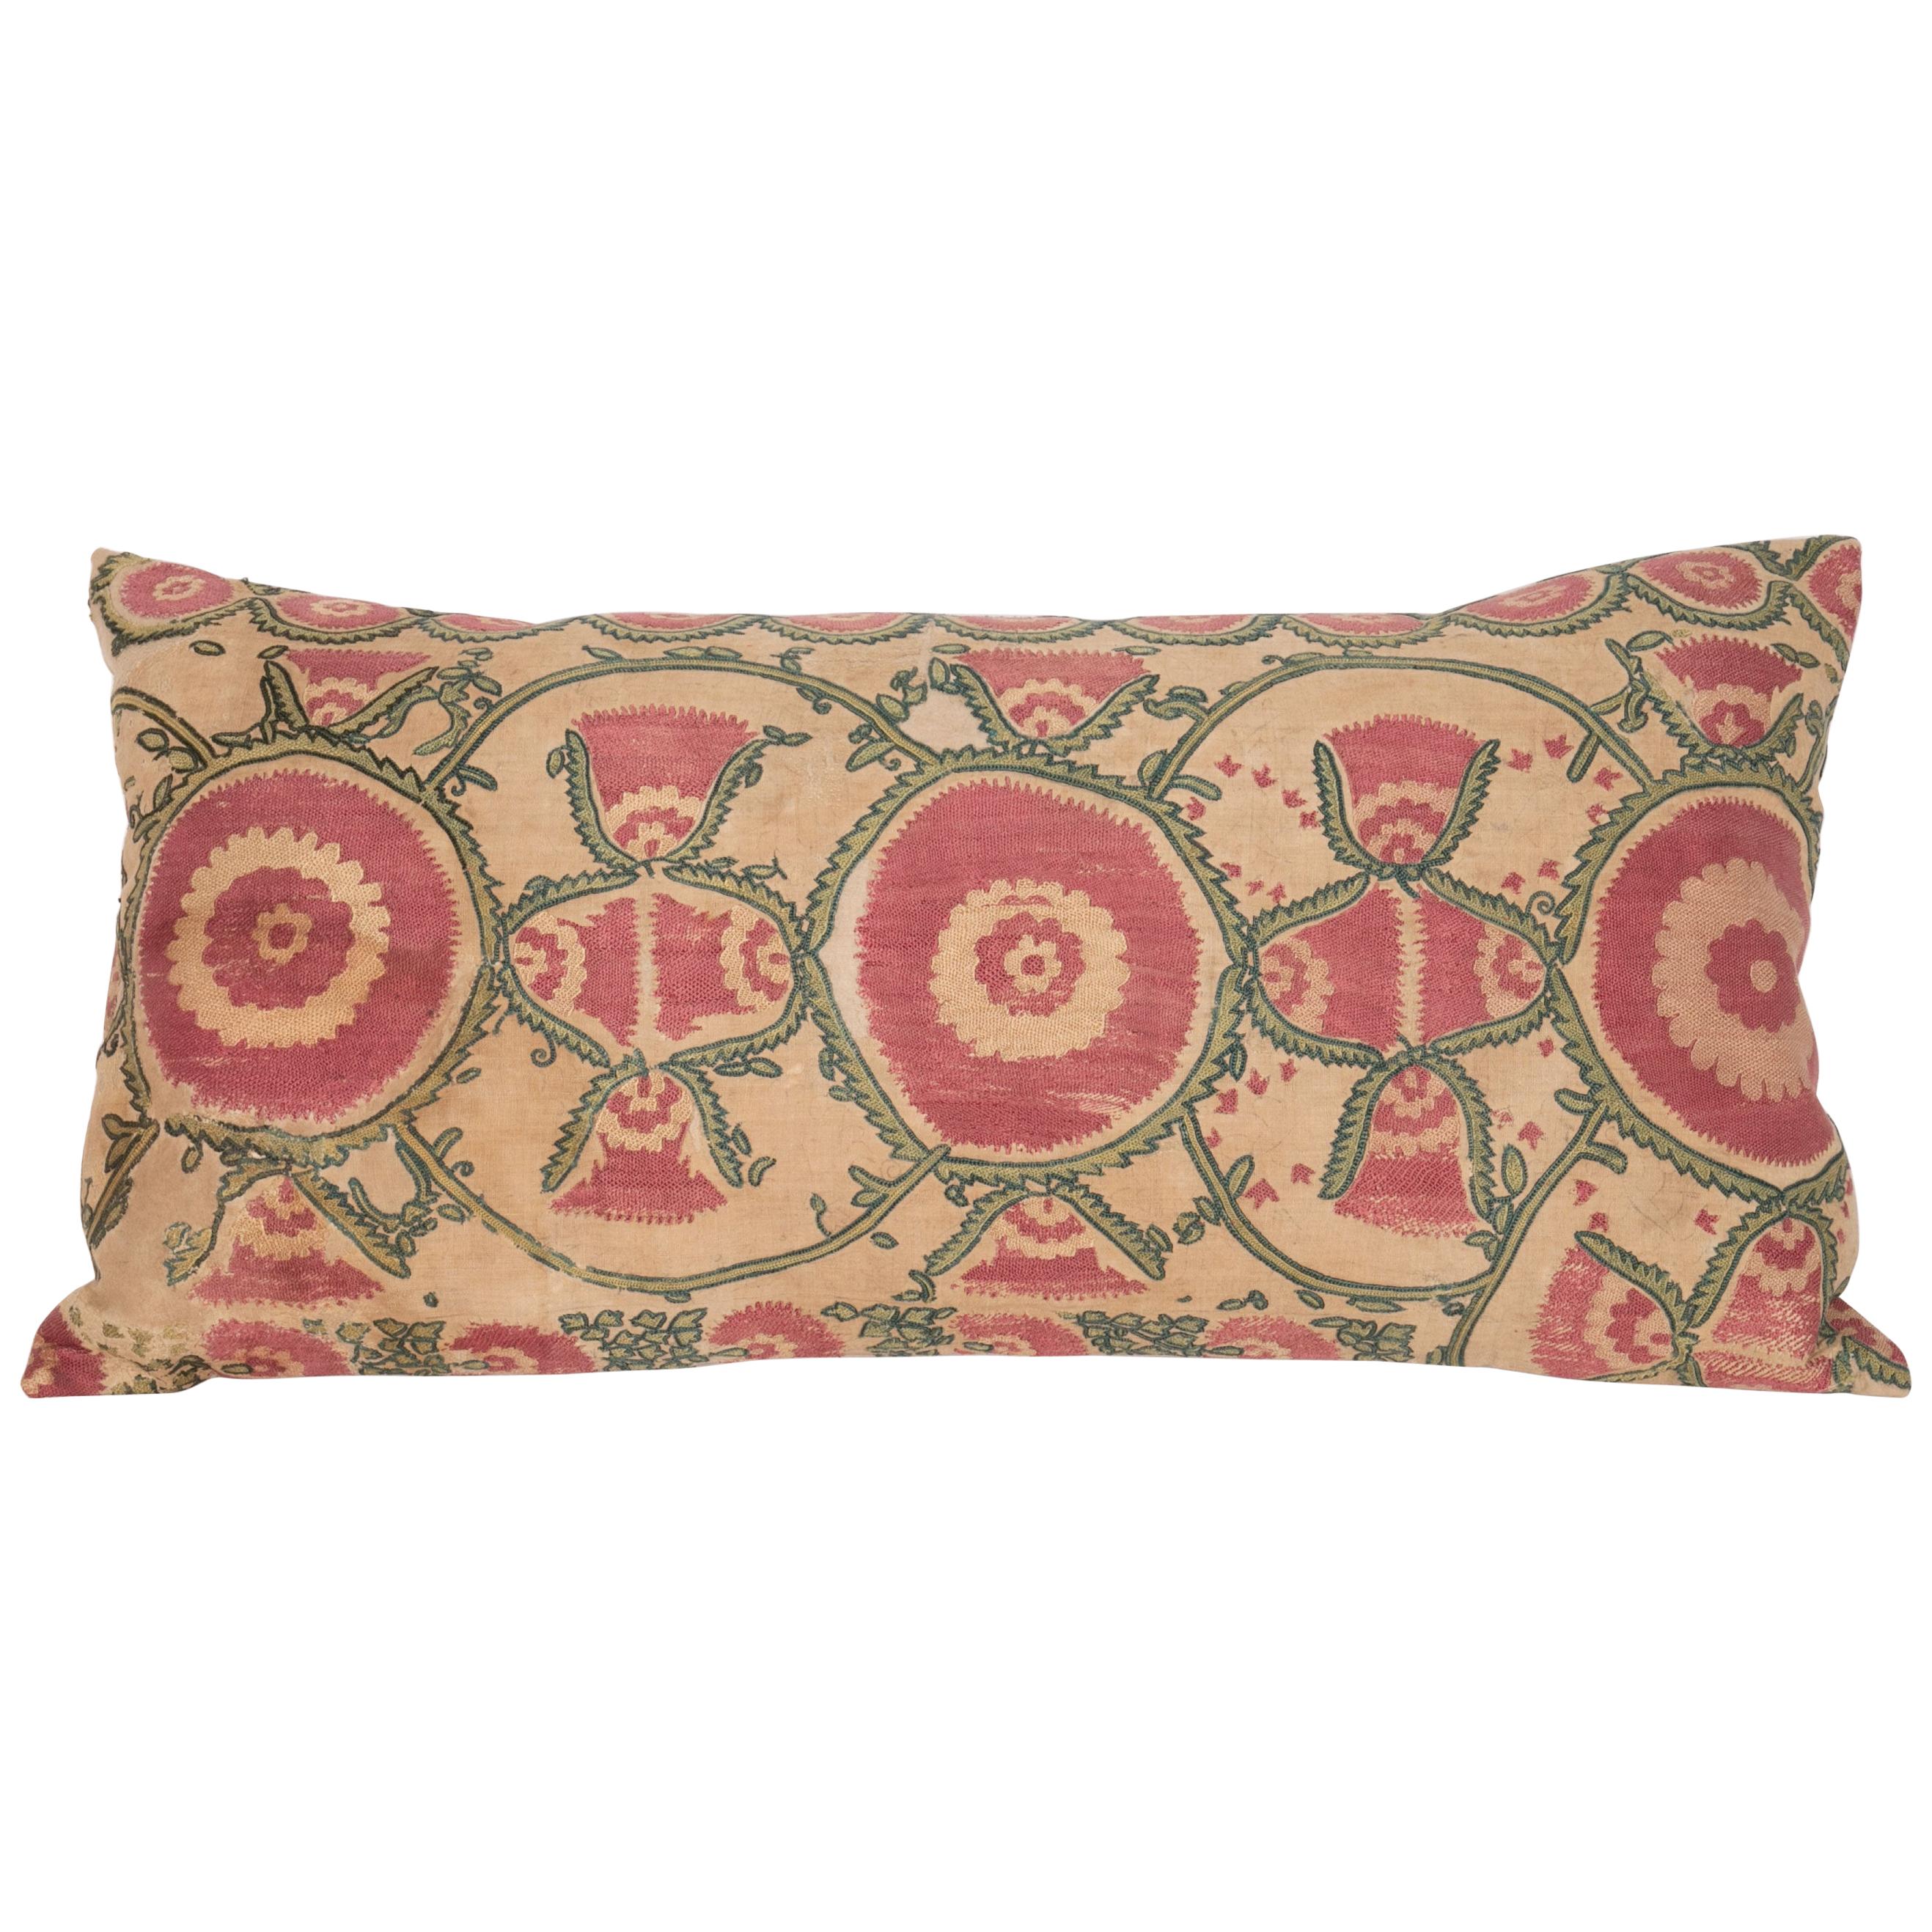 Antique Suzani Pillow Case Fashioned from a Mid-19th Century, Ura Tube Suzani